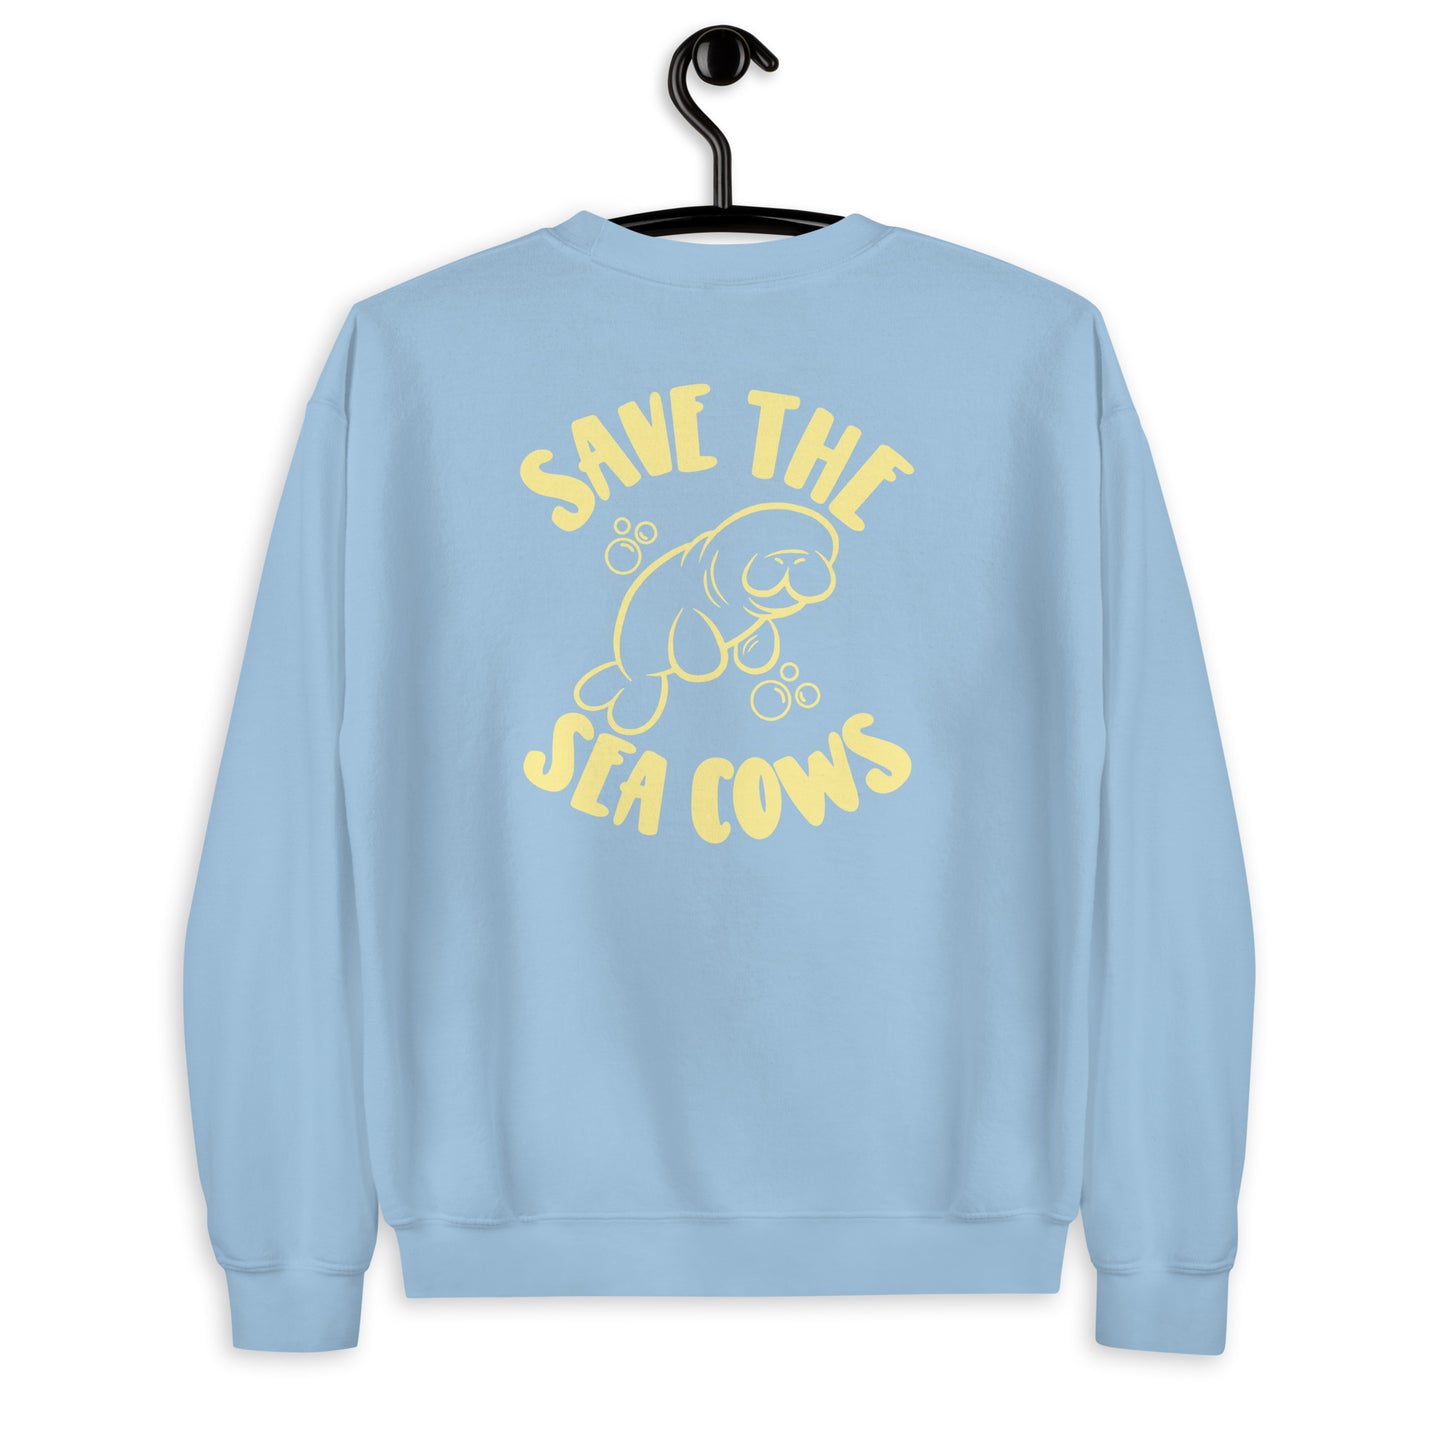 “Hello Yellow” Save the Sea Cows Sweatshirt